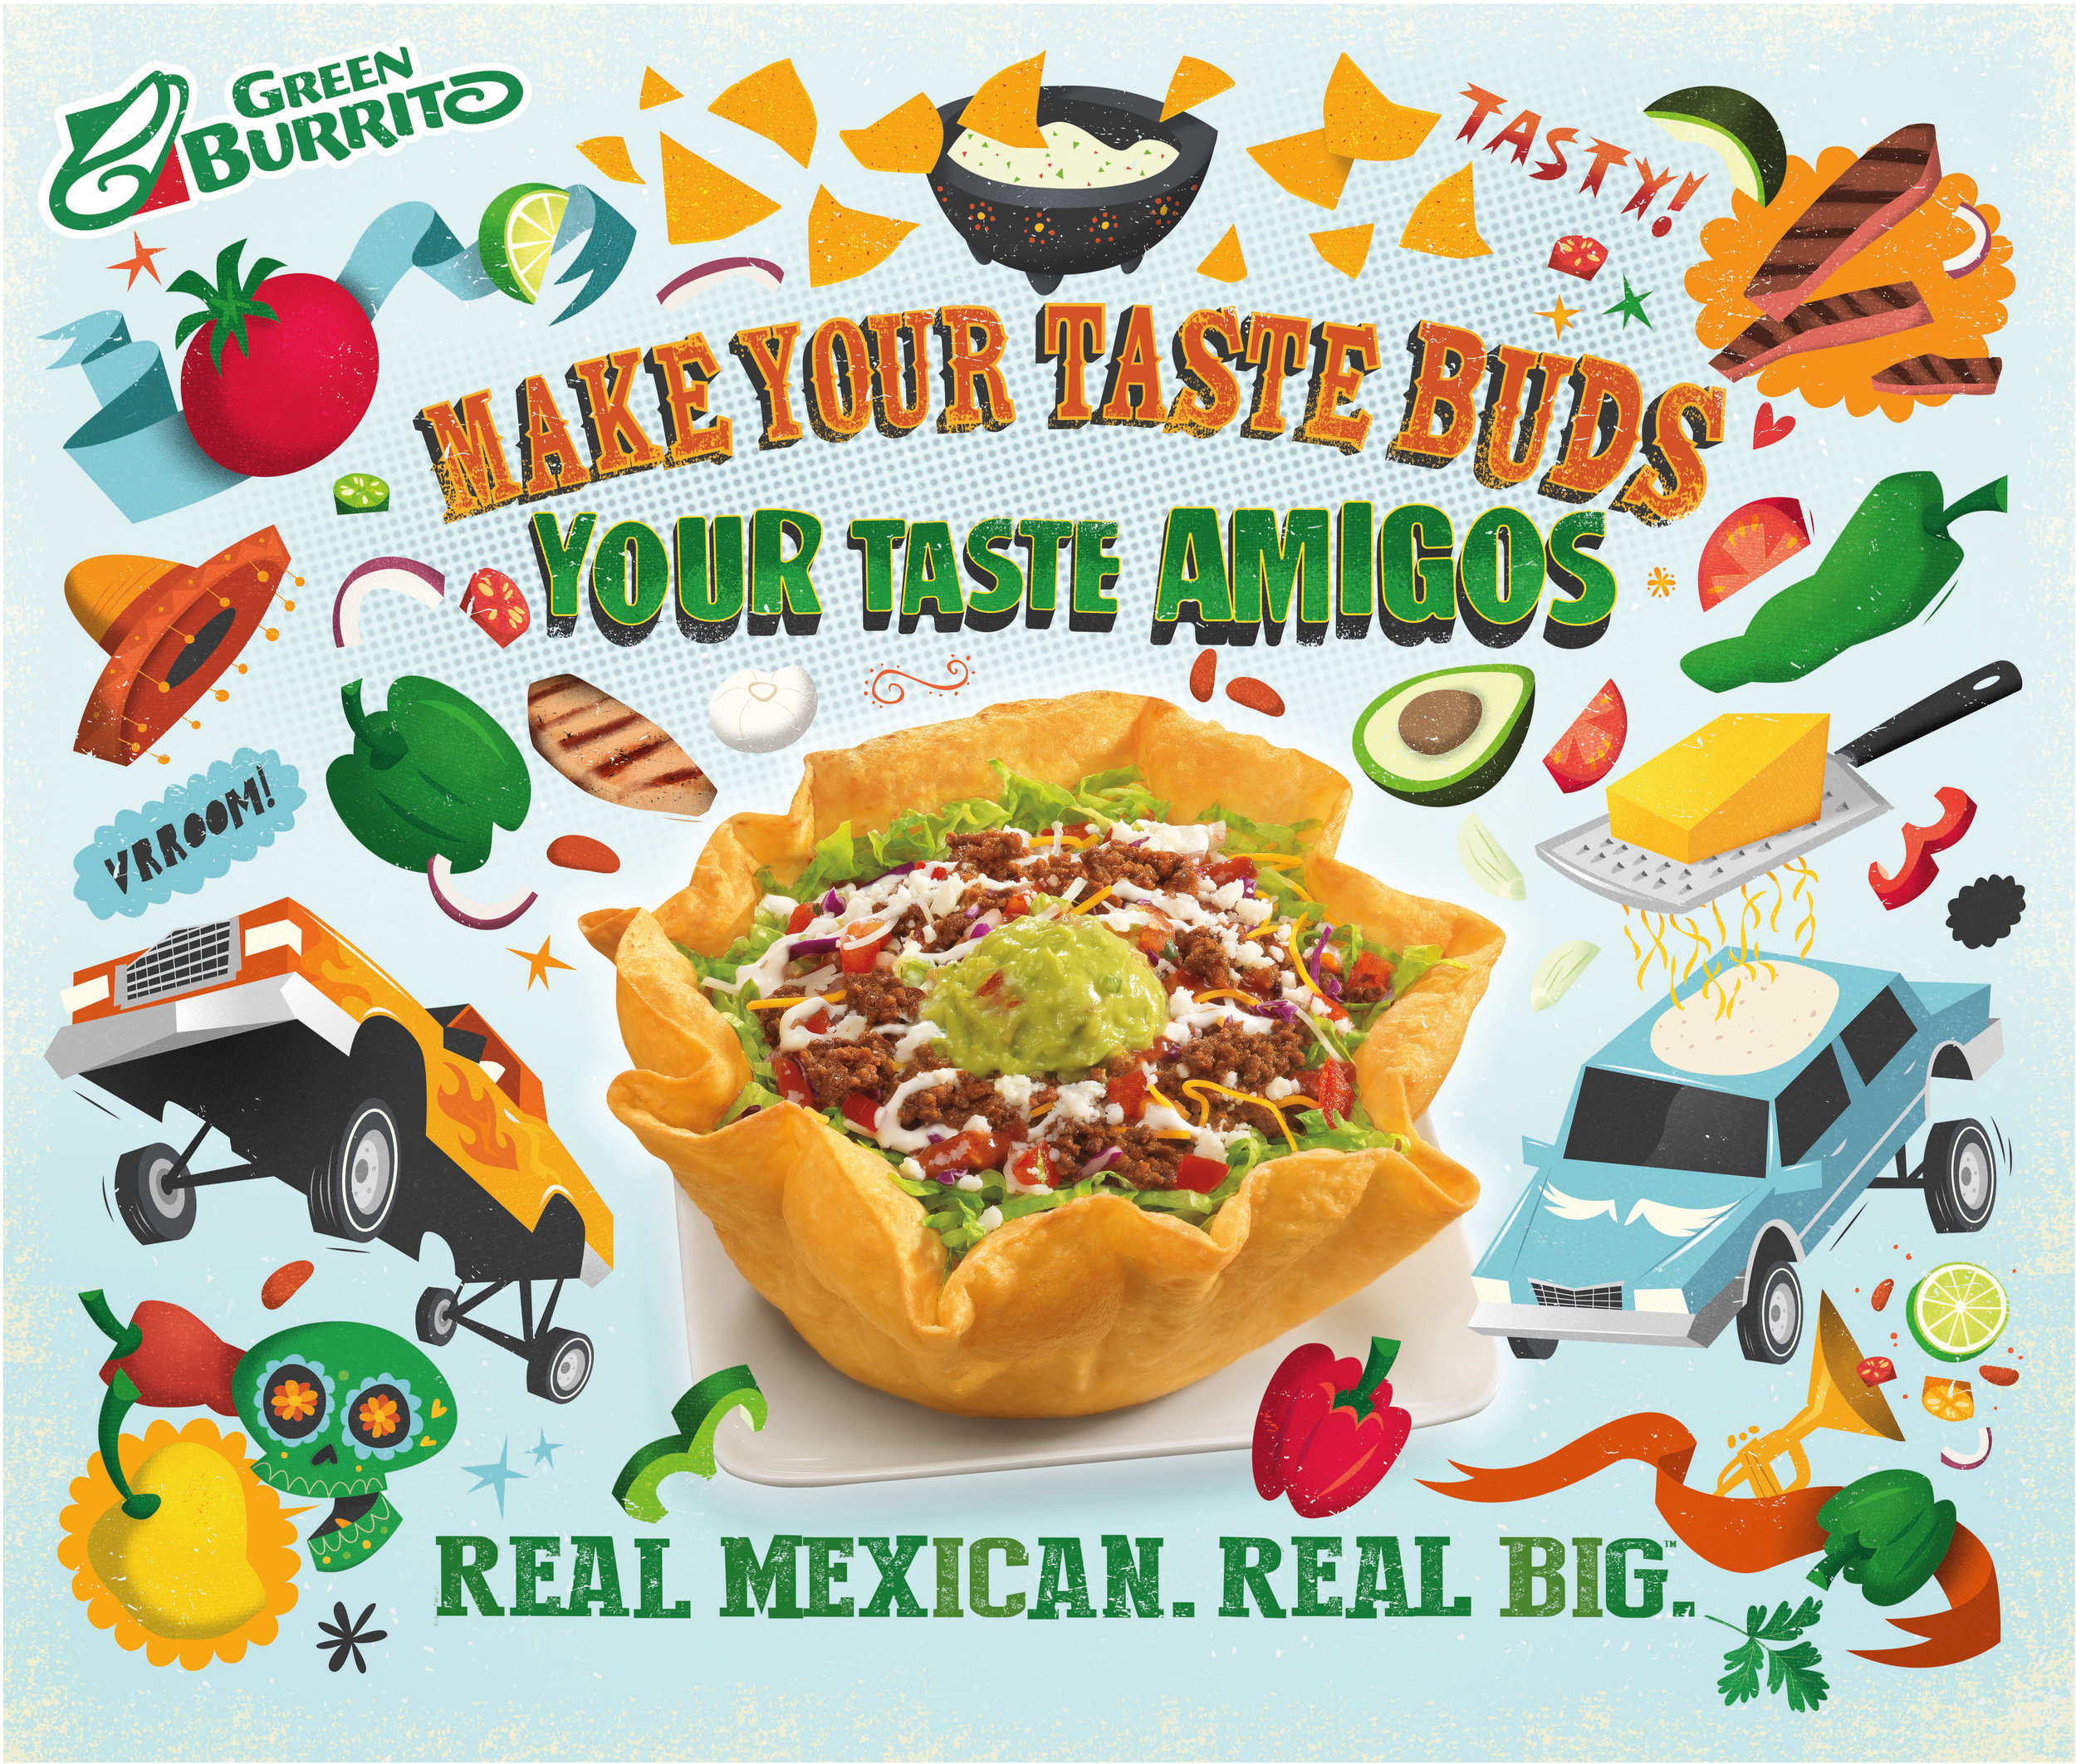 Green-Burrito-Poster-3.jpg